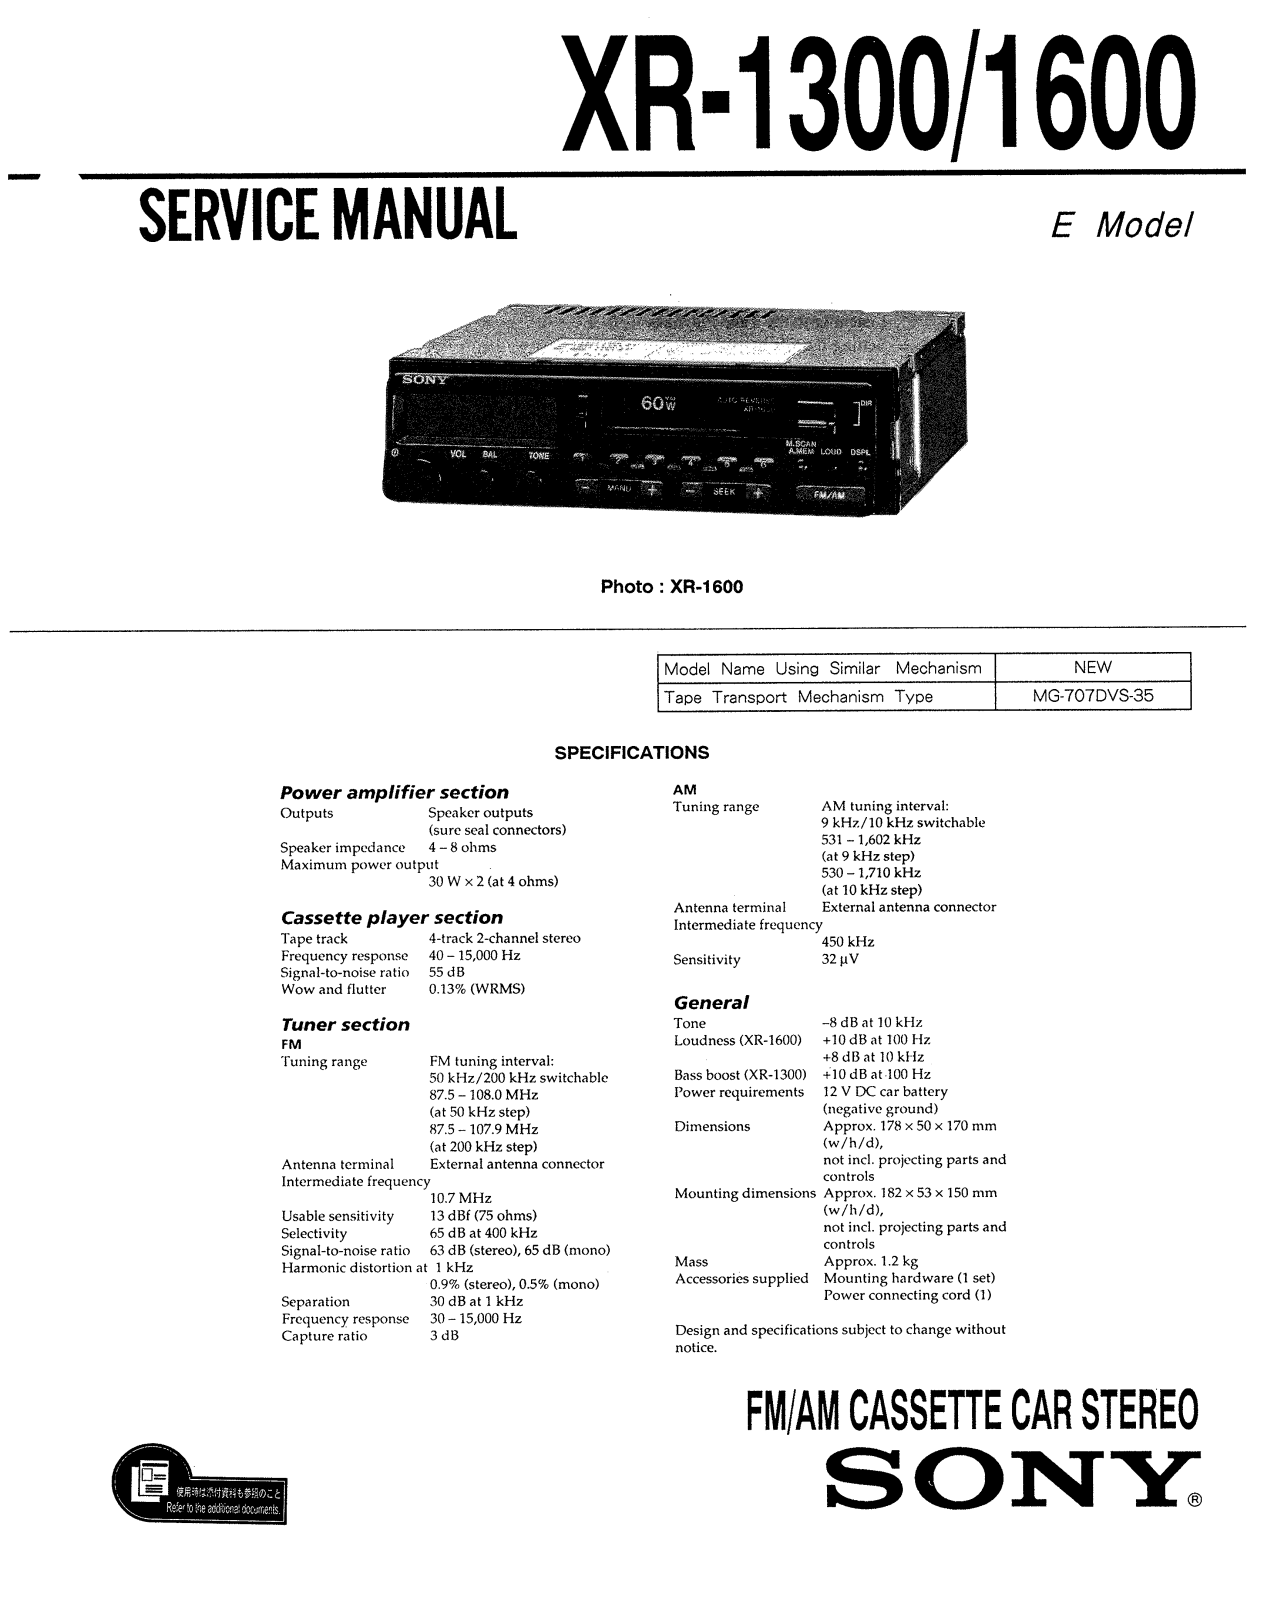 Sony XR-1300, XR-1600 Service manual